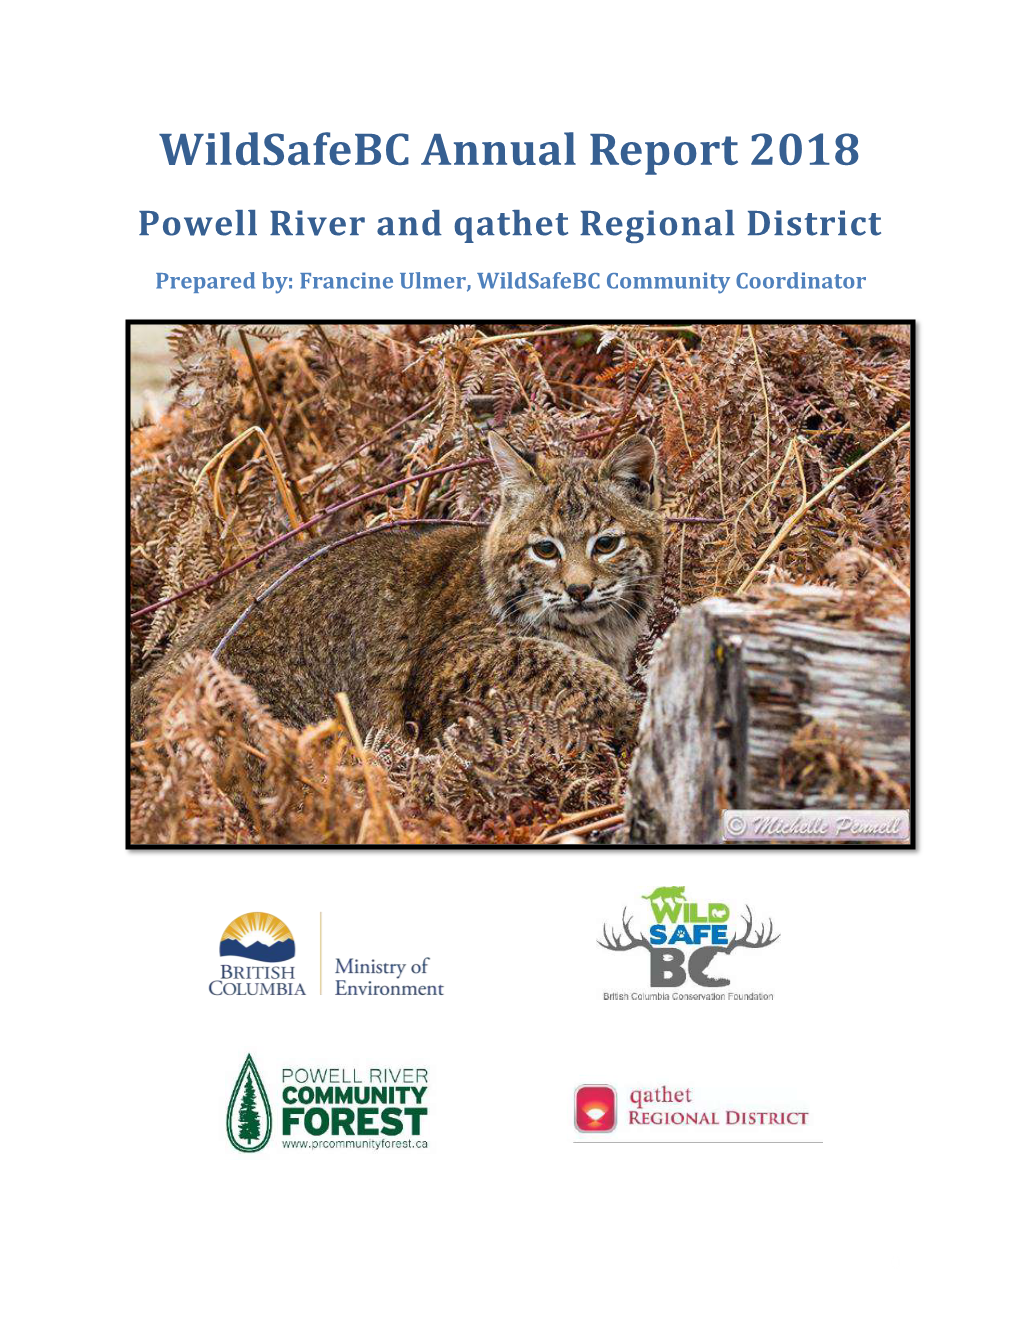 Wildsafebc Powell River and Qathet Regional District Annual Report